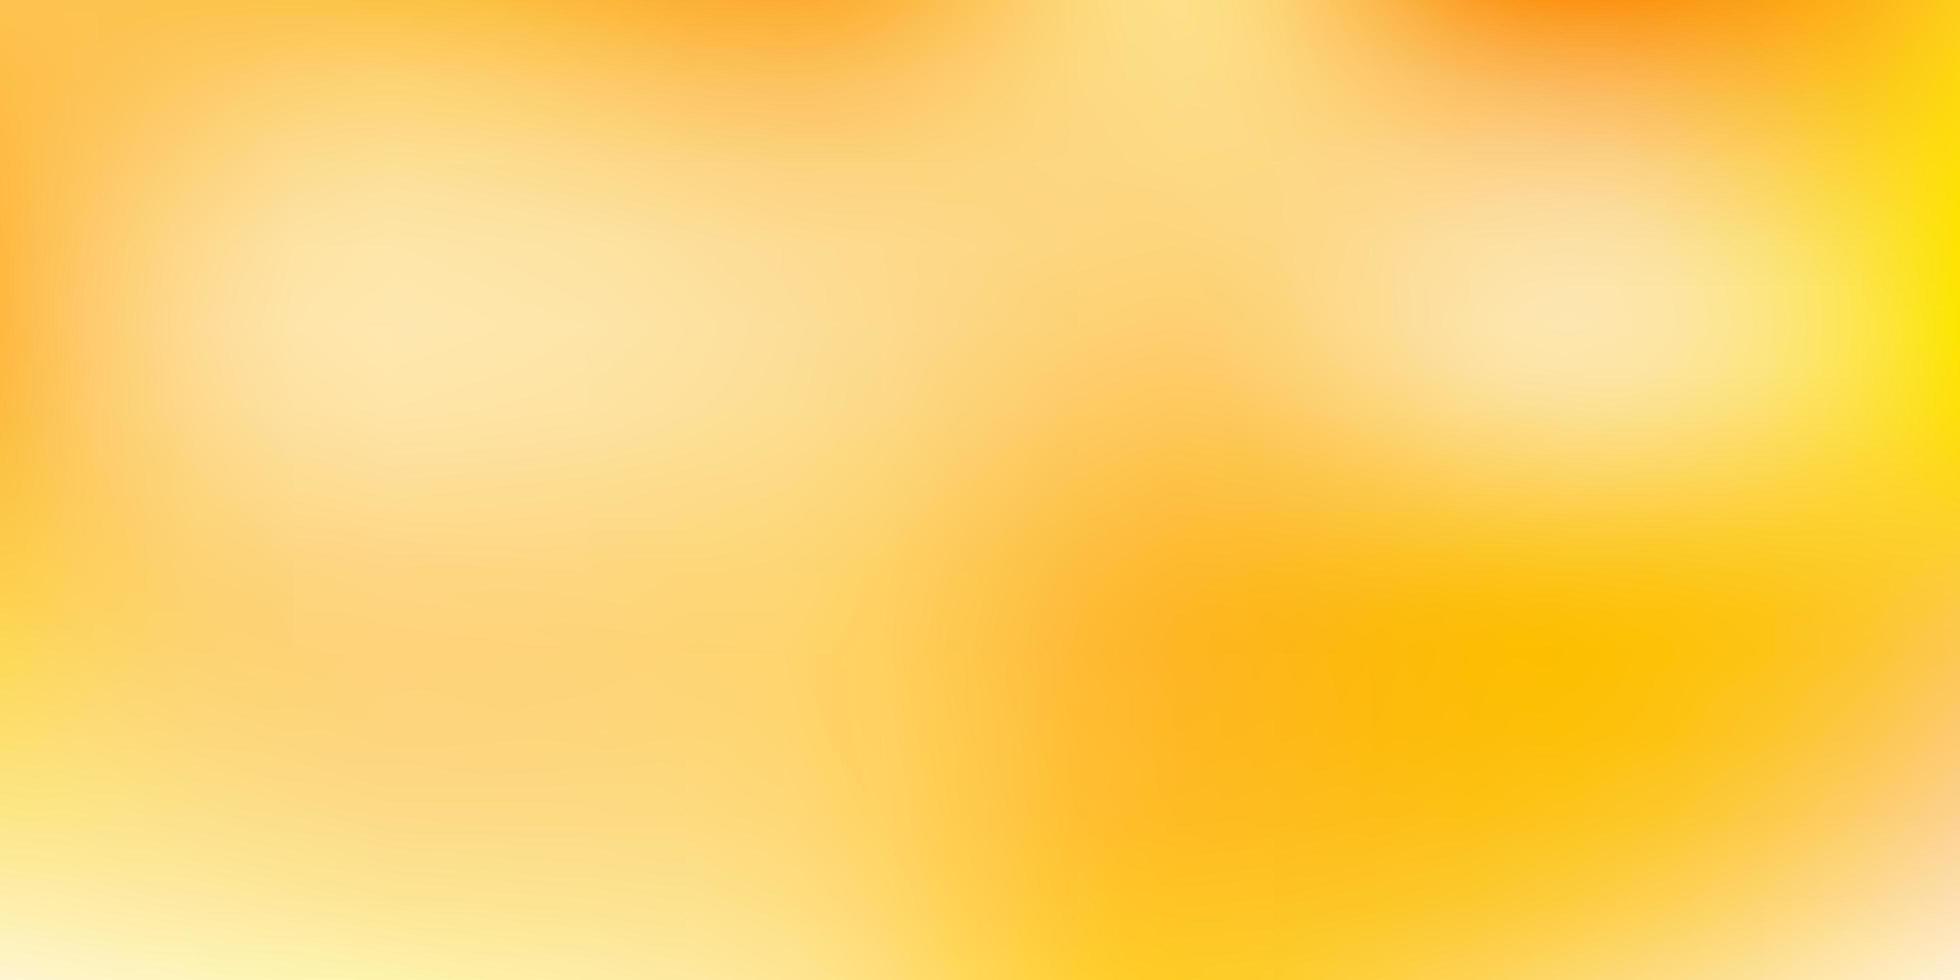 Light Orange vector blur template.